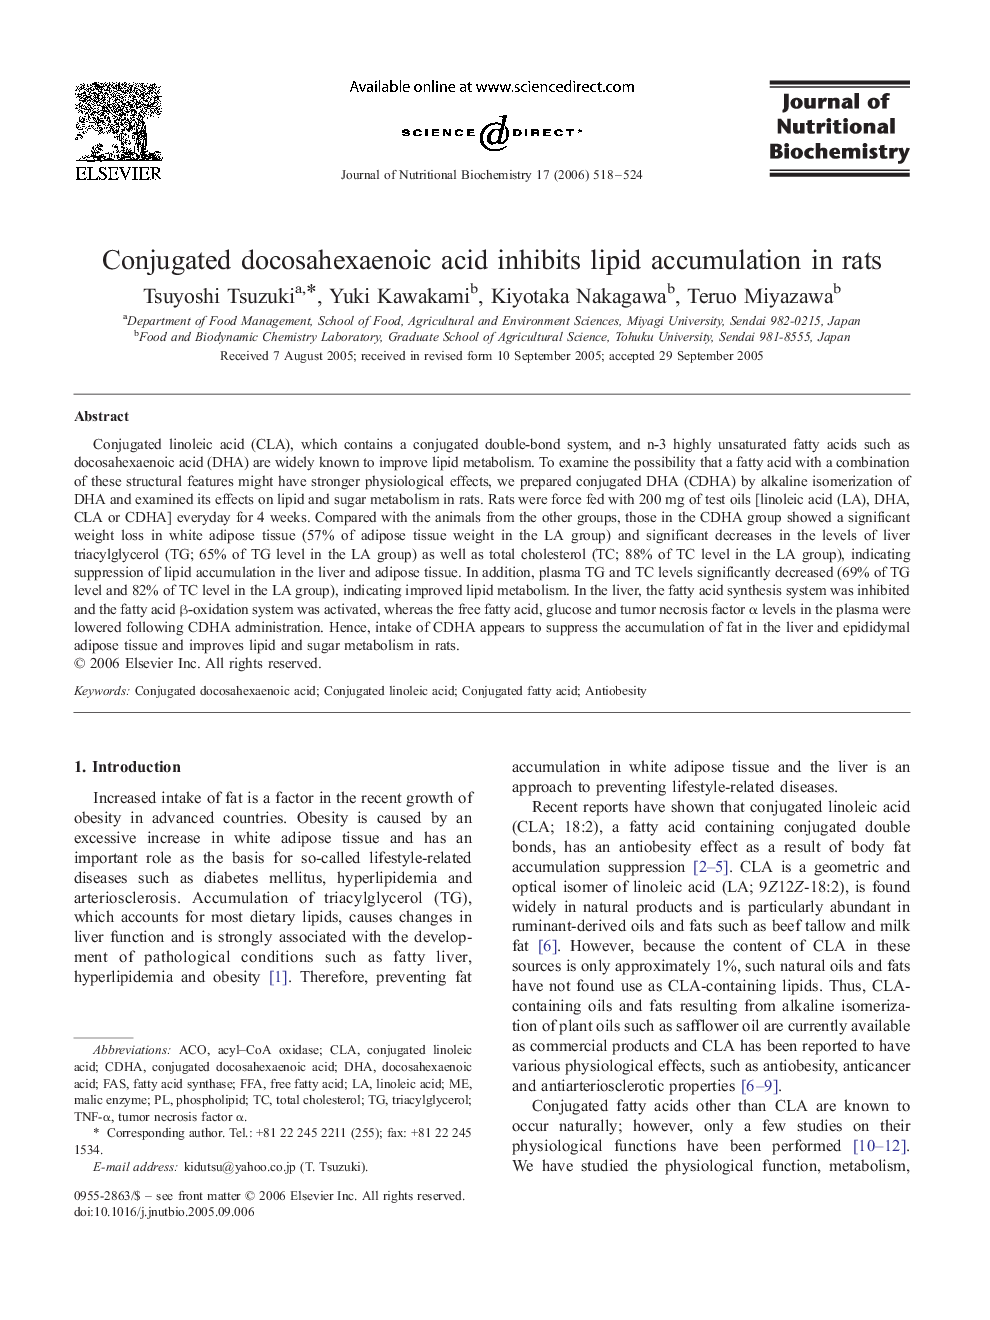 Conjugated docosahexaenoic acid inhibits lipid accumulation in rats